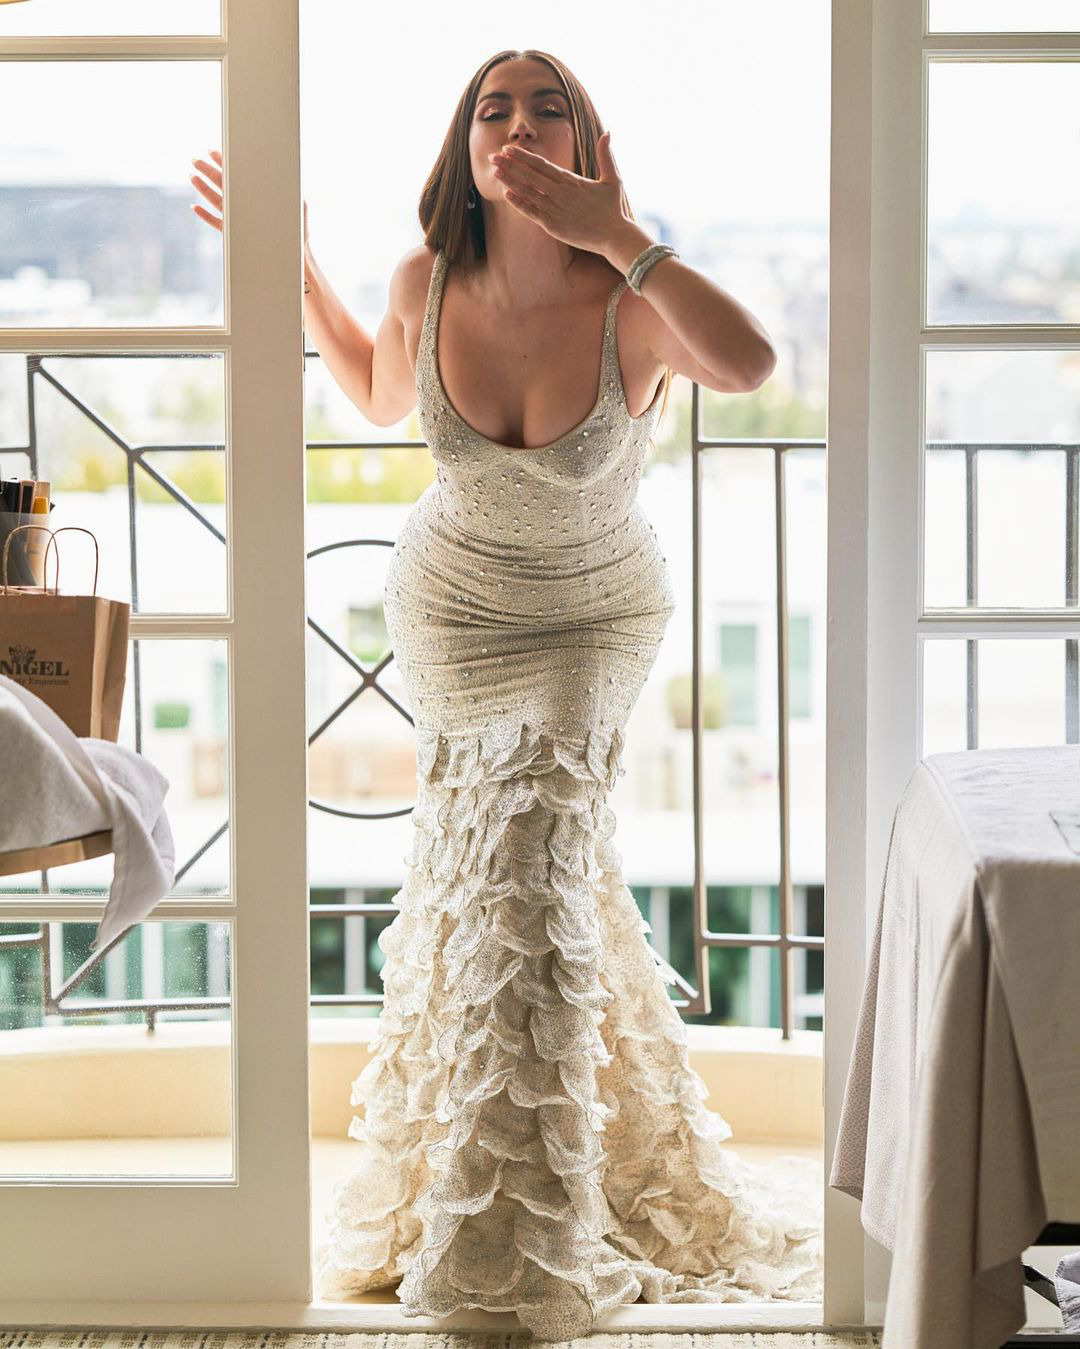 BAFTAS 2023: Ana de Armas dons blush Louis Vuitton gown